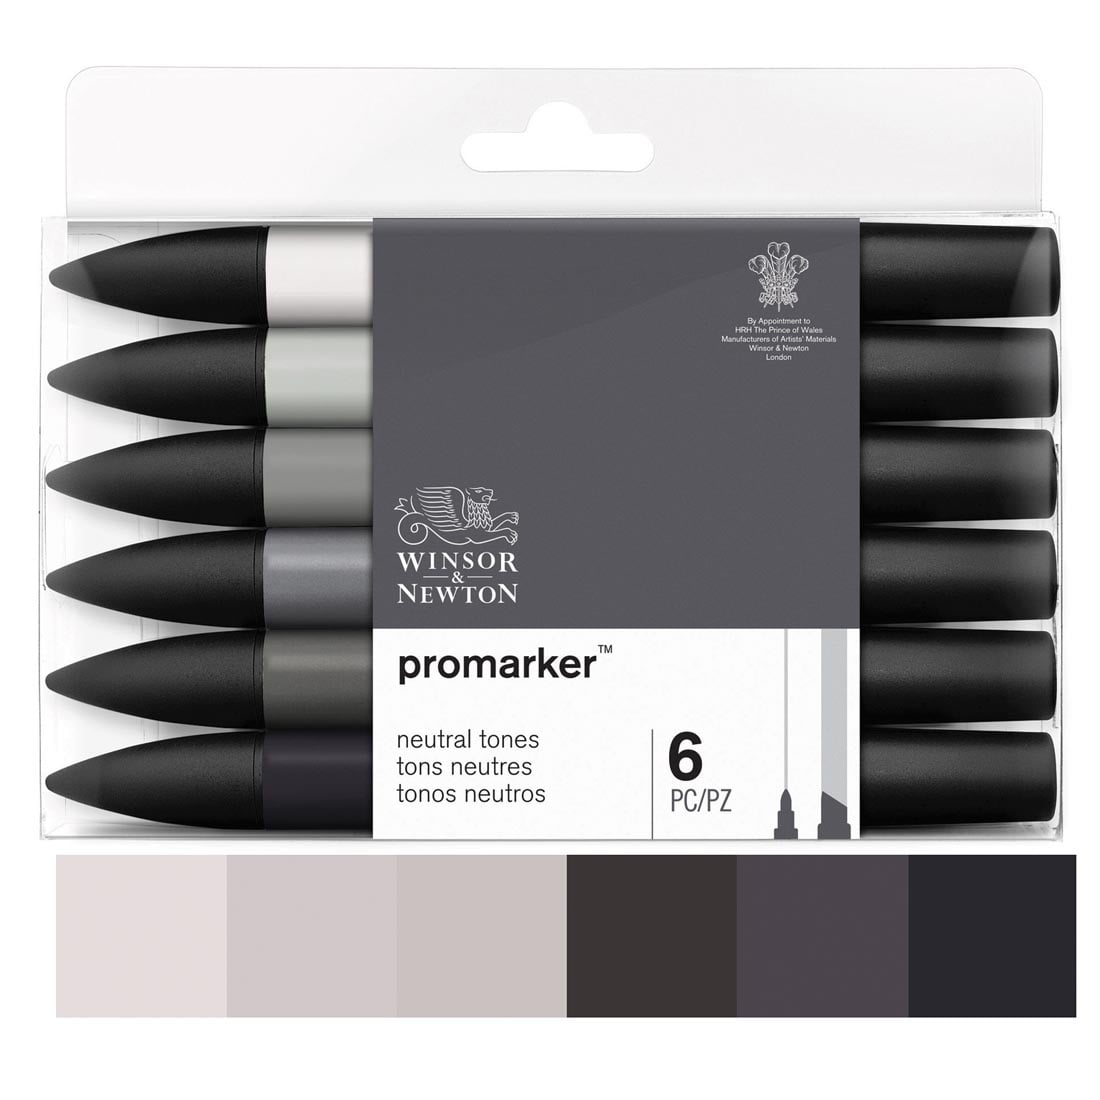 Winsor & Newton Promarker Brush Markers - Pastel Tones, Set of 6